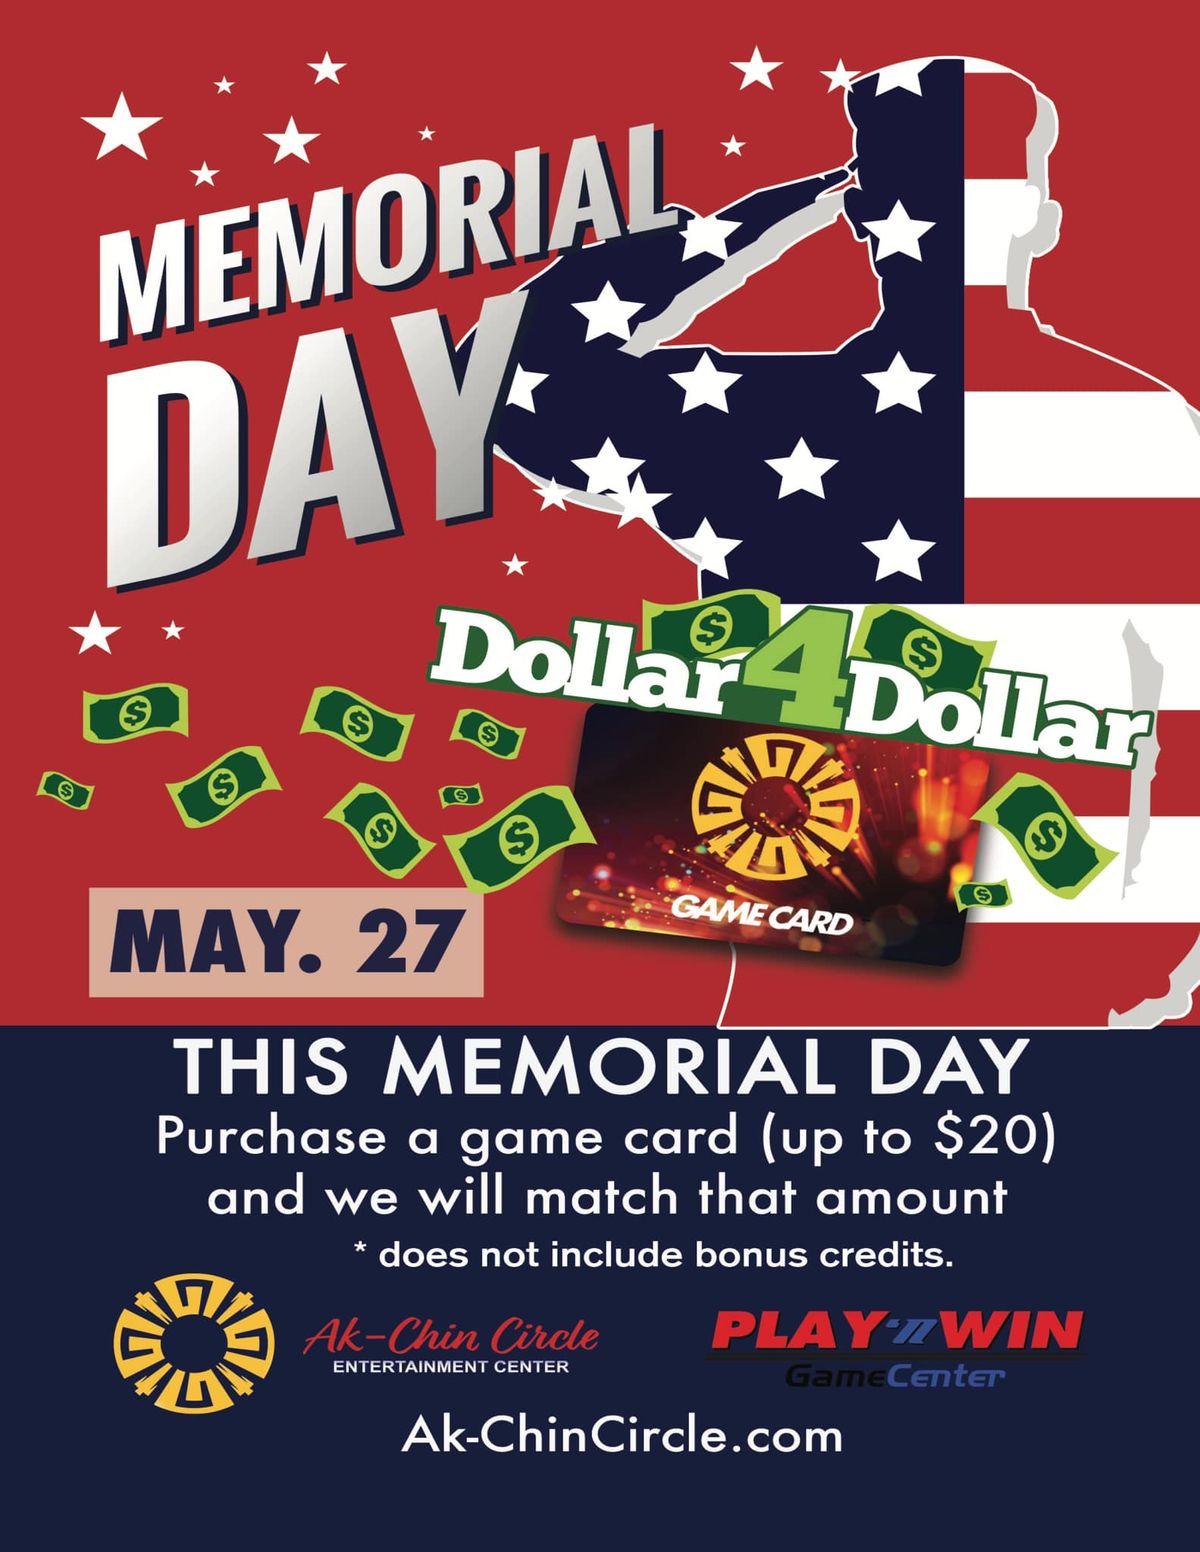 Memorial Day Dollar4Dollar at Ak-Chin Circle